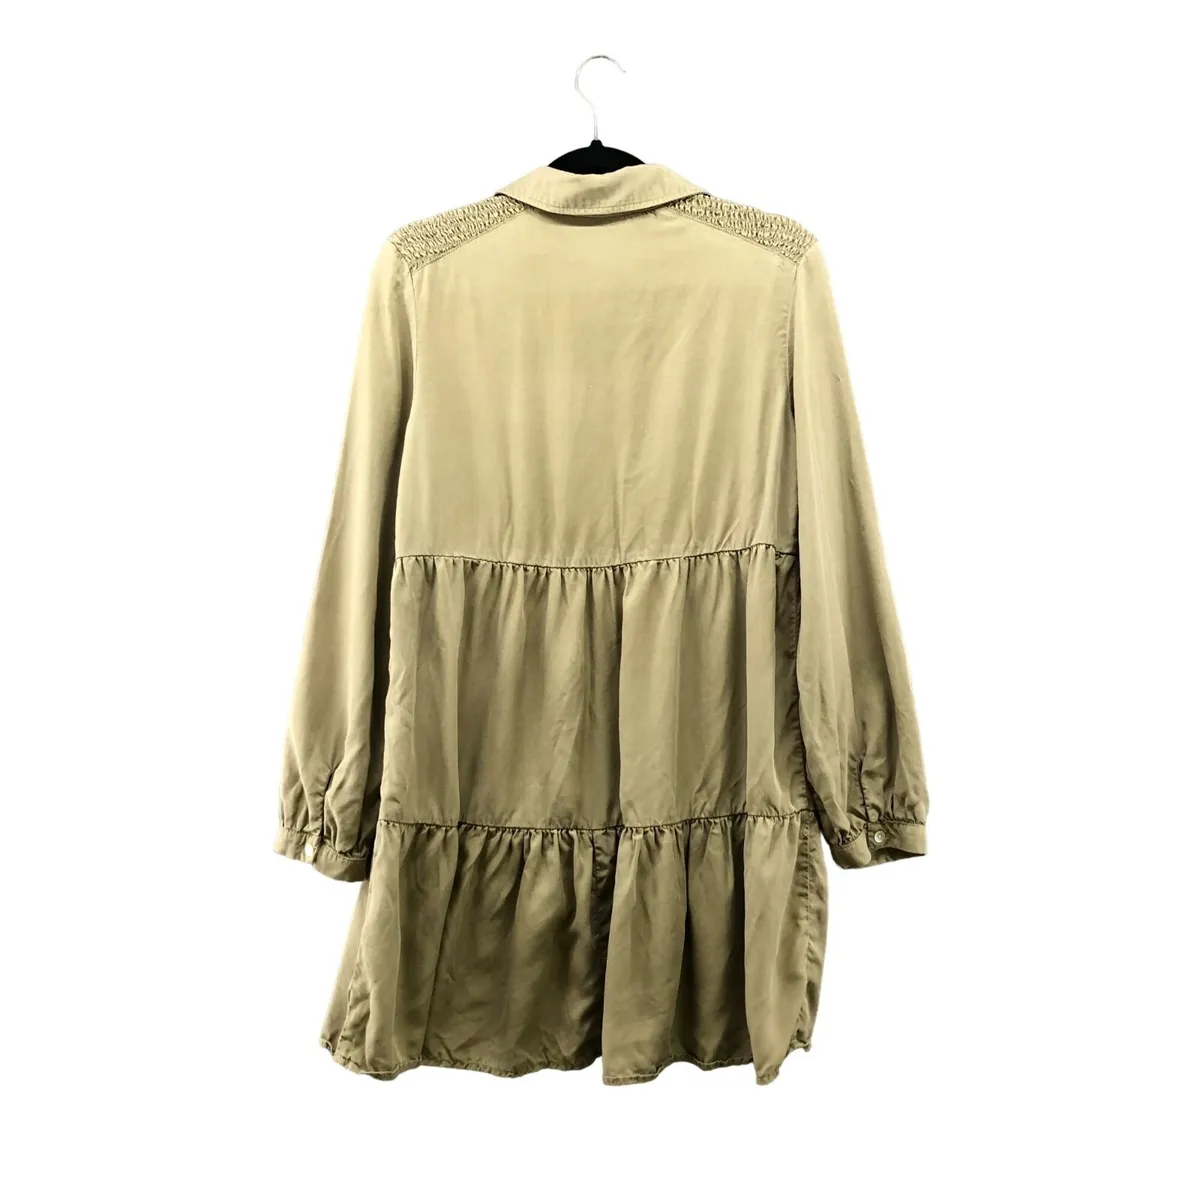 Zara Lyocell Tiered Shirt Dress Olive Green Long Sleeve Size XS